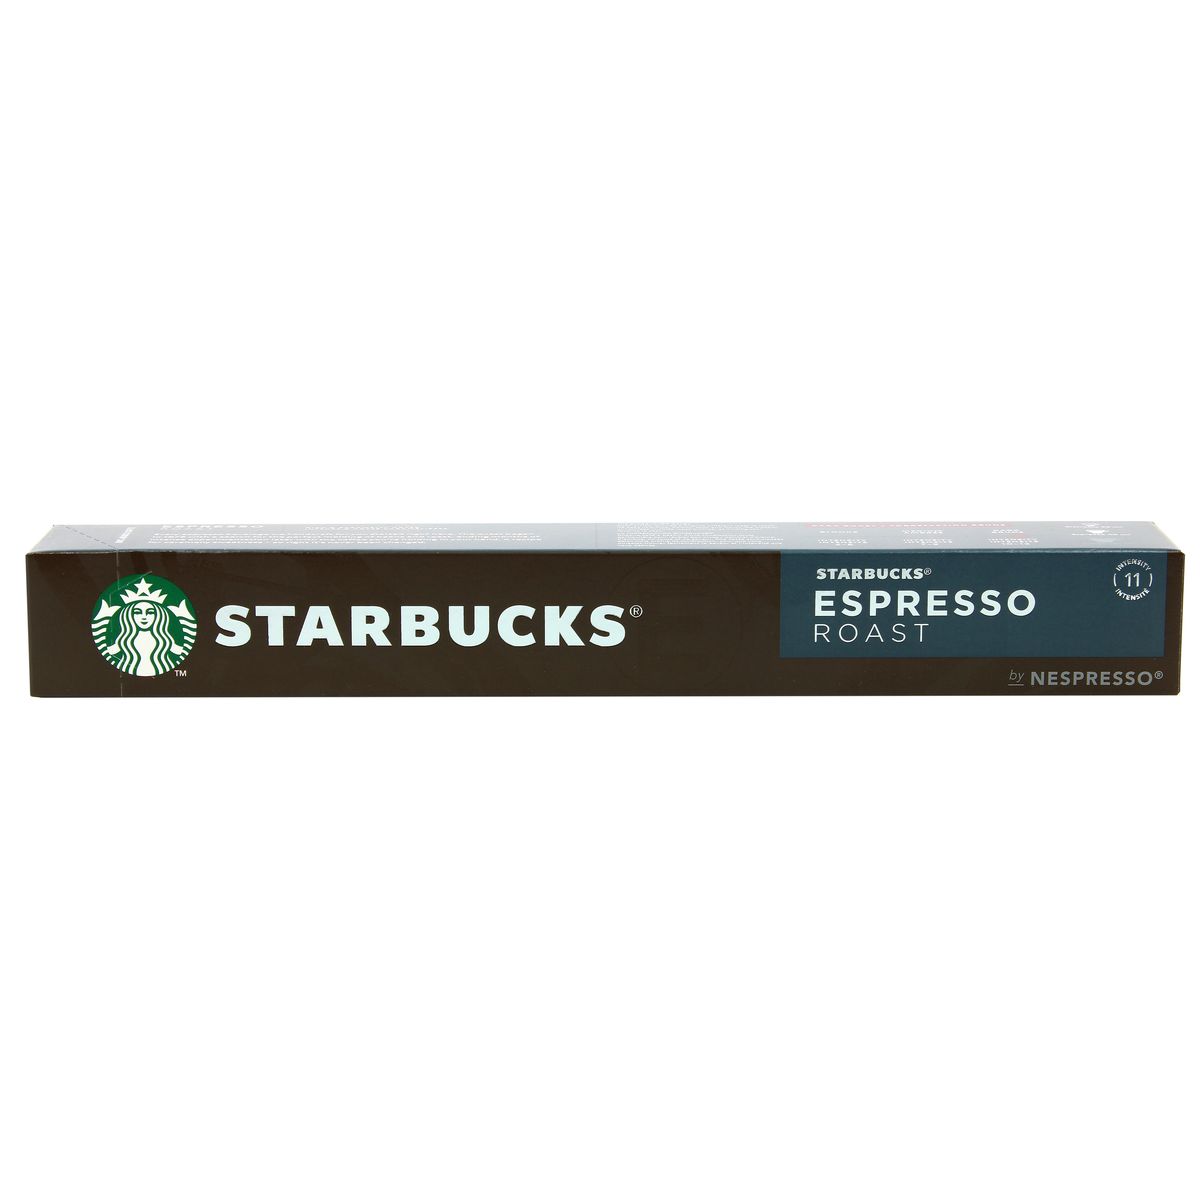 Starbucks Blonde Espresso Roast - seulement 9,79 € chez